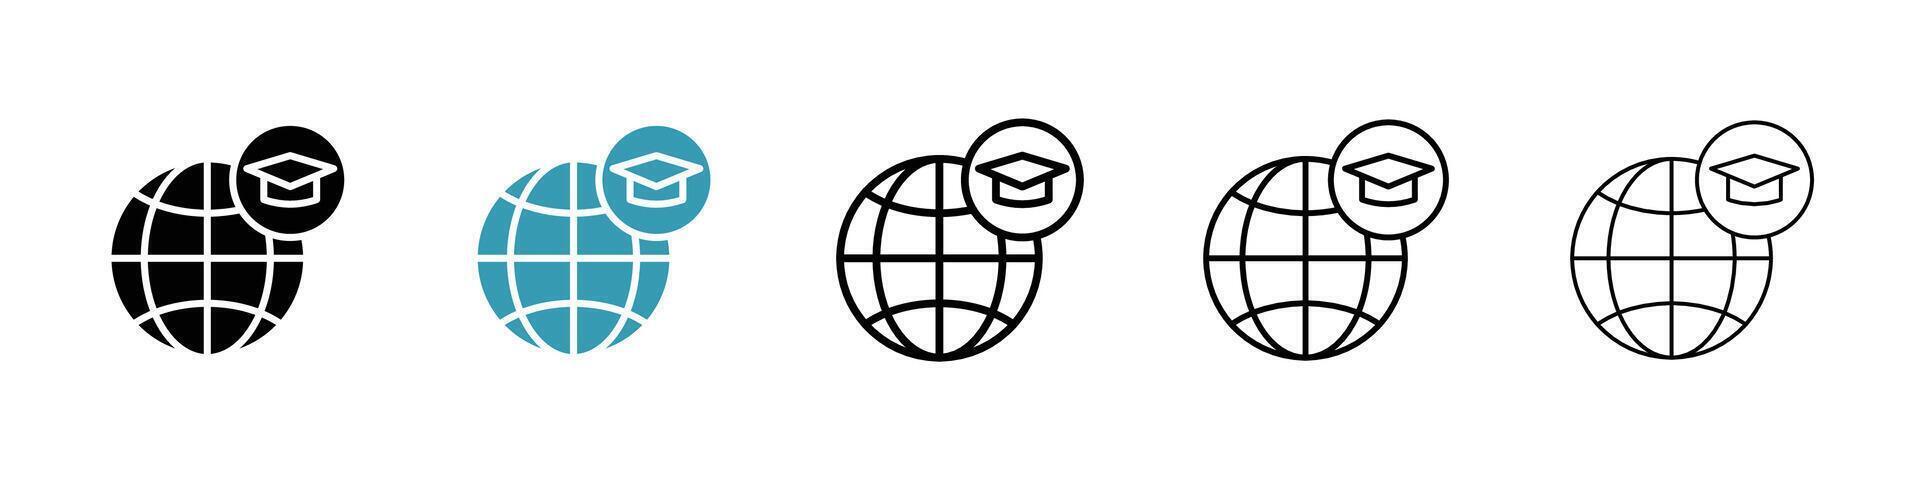 Welt Universität Symbol vektor